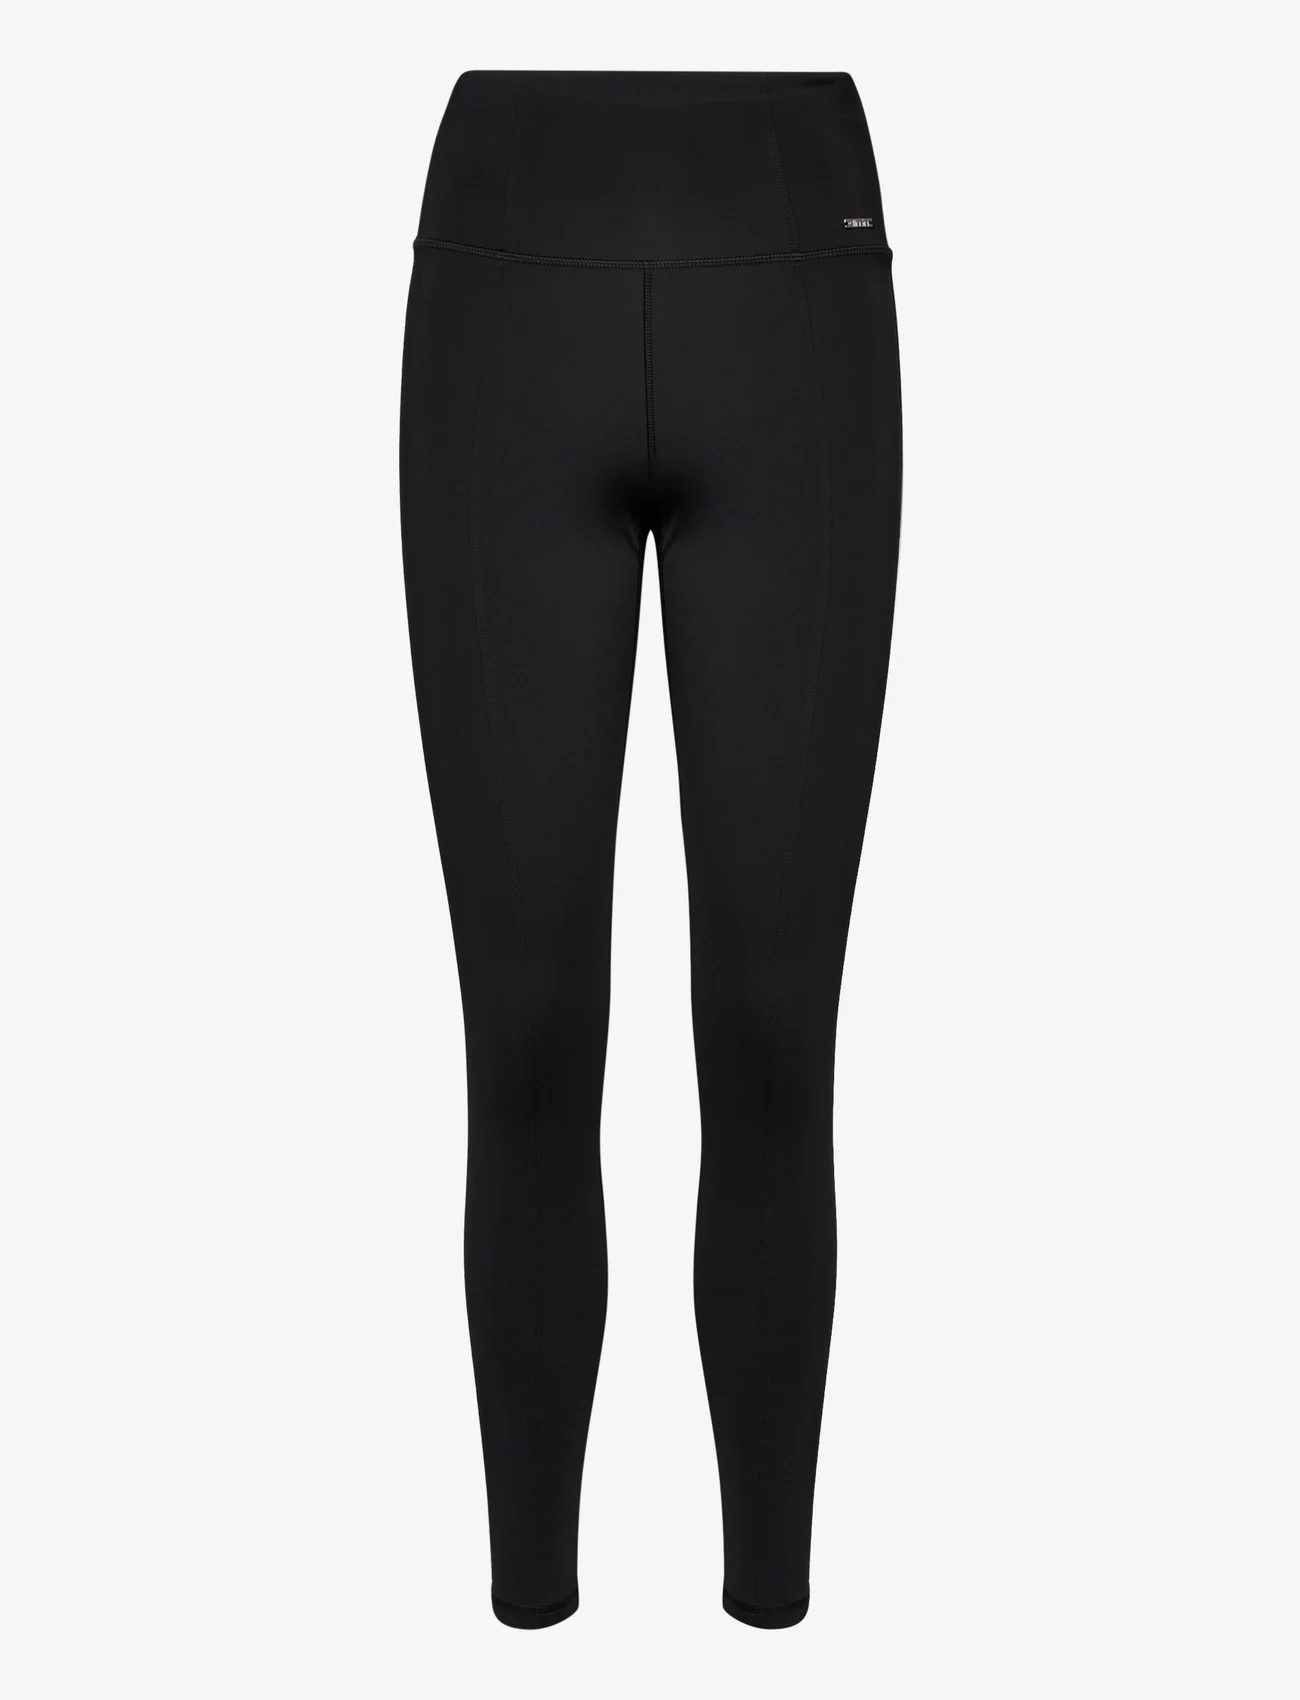 AIM'N - Warming Pintuck Tights - leggings - black - 0